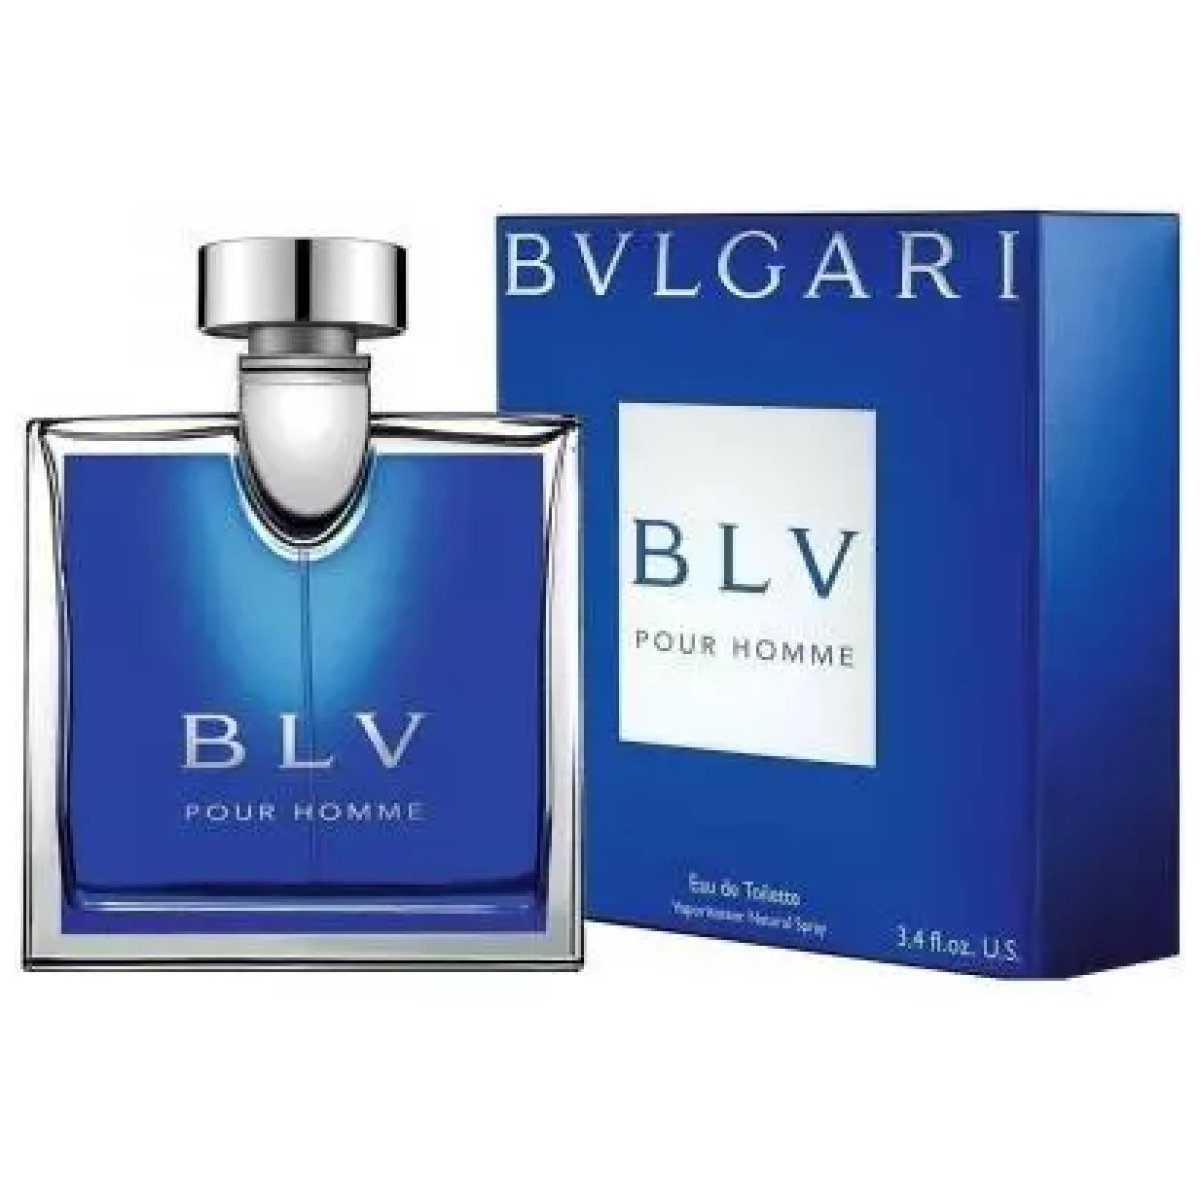 Bvlgari Blv Blue Pour Homme EDT Perfume For Men 100ml